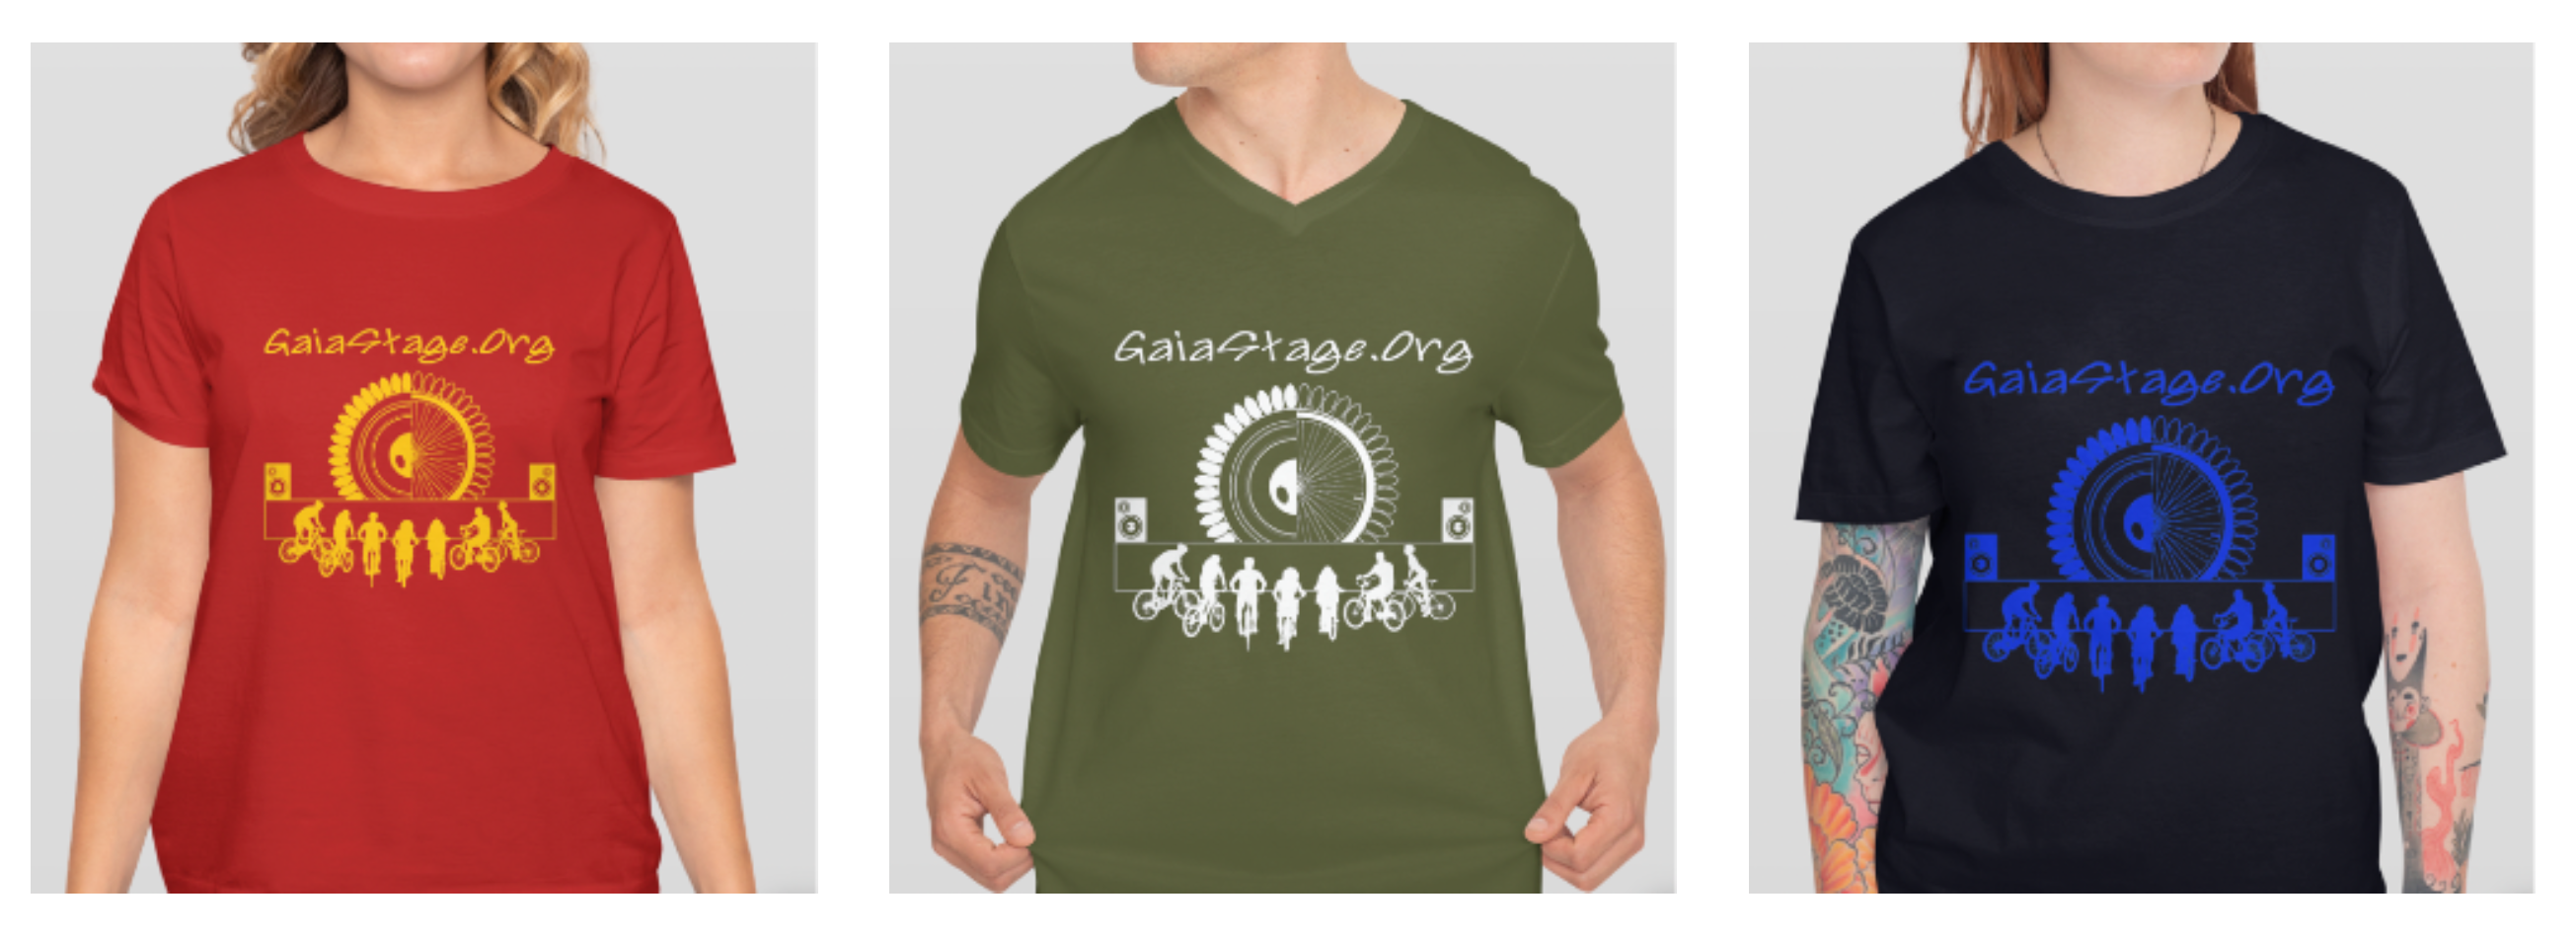 3 models wearing GaiaStage T-shirts